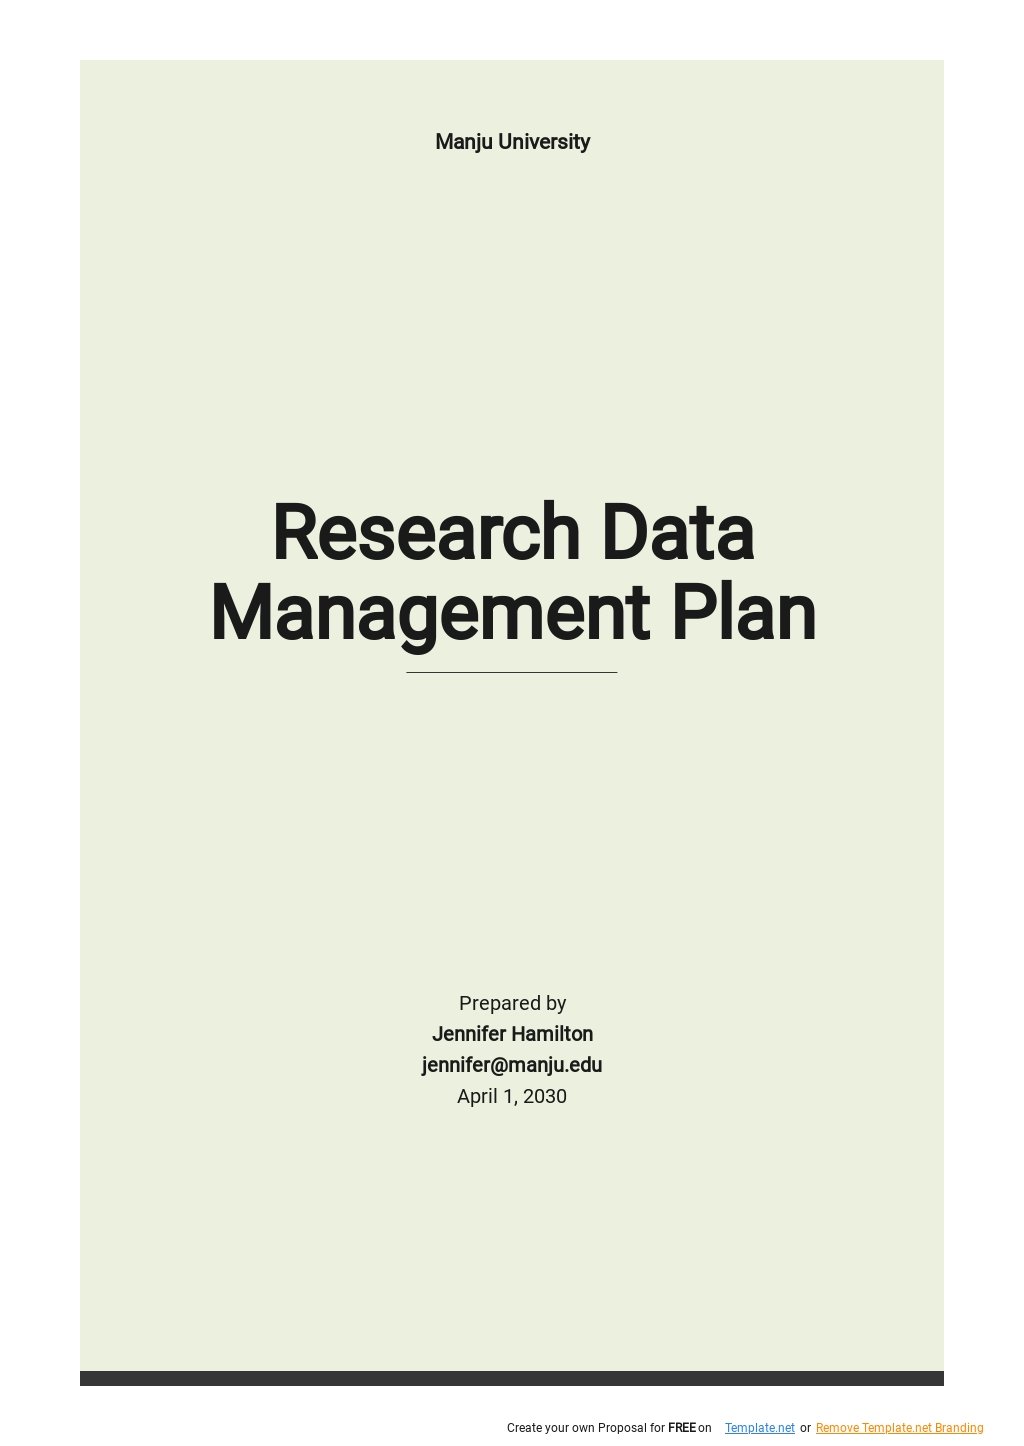 Research Data Management Plan Template.jpe